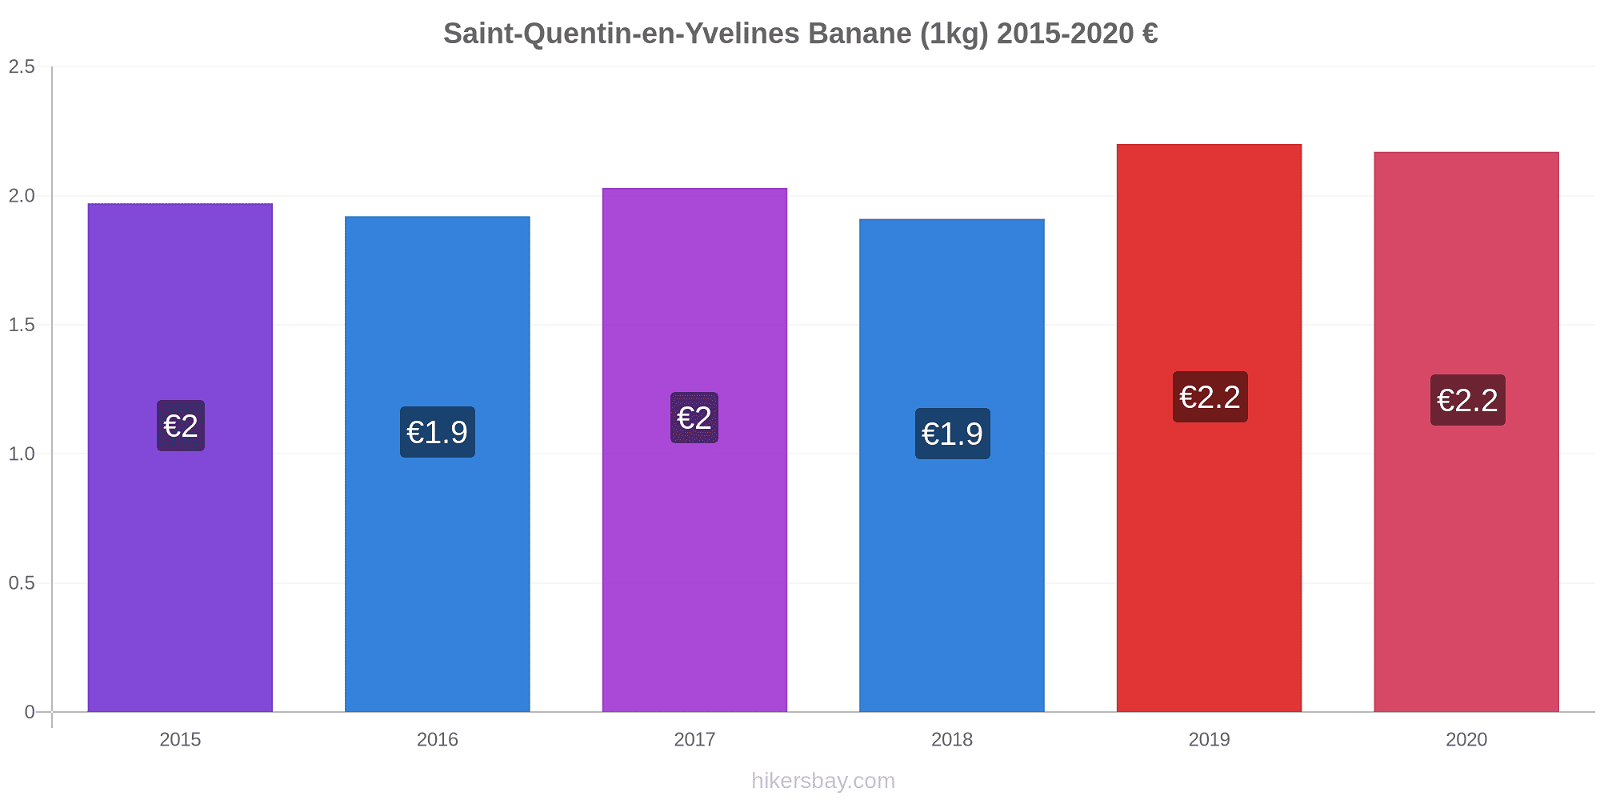 Saint-Quentin-en-Yvelines variazioni di prezzo Banana (1kg) hikersbay.com